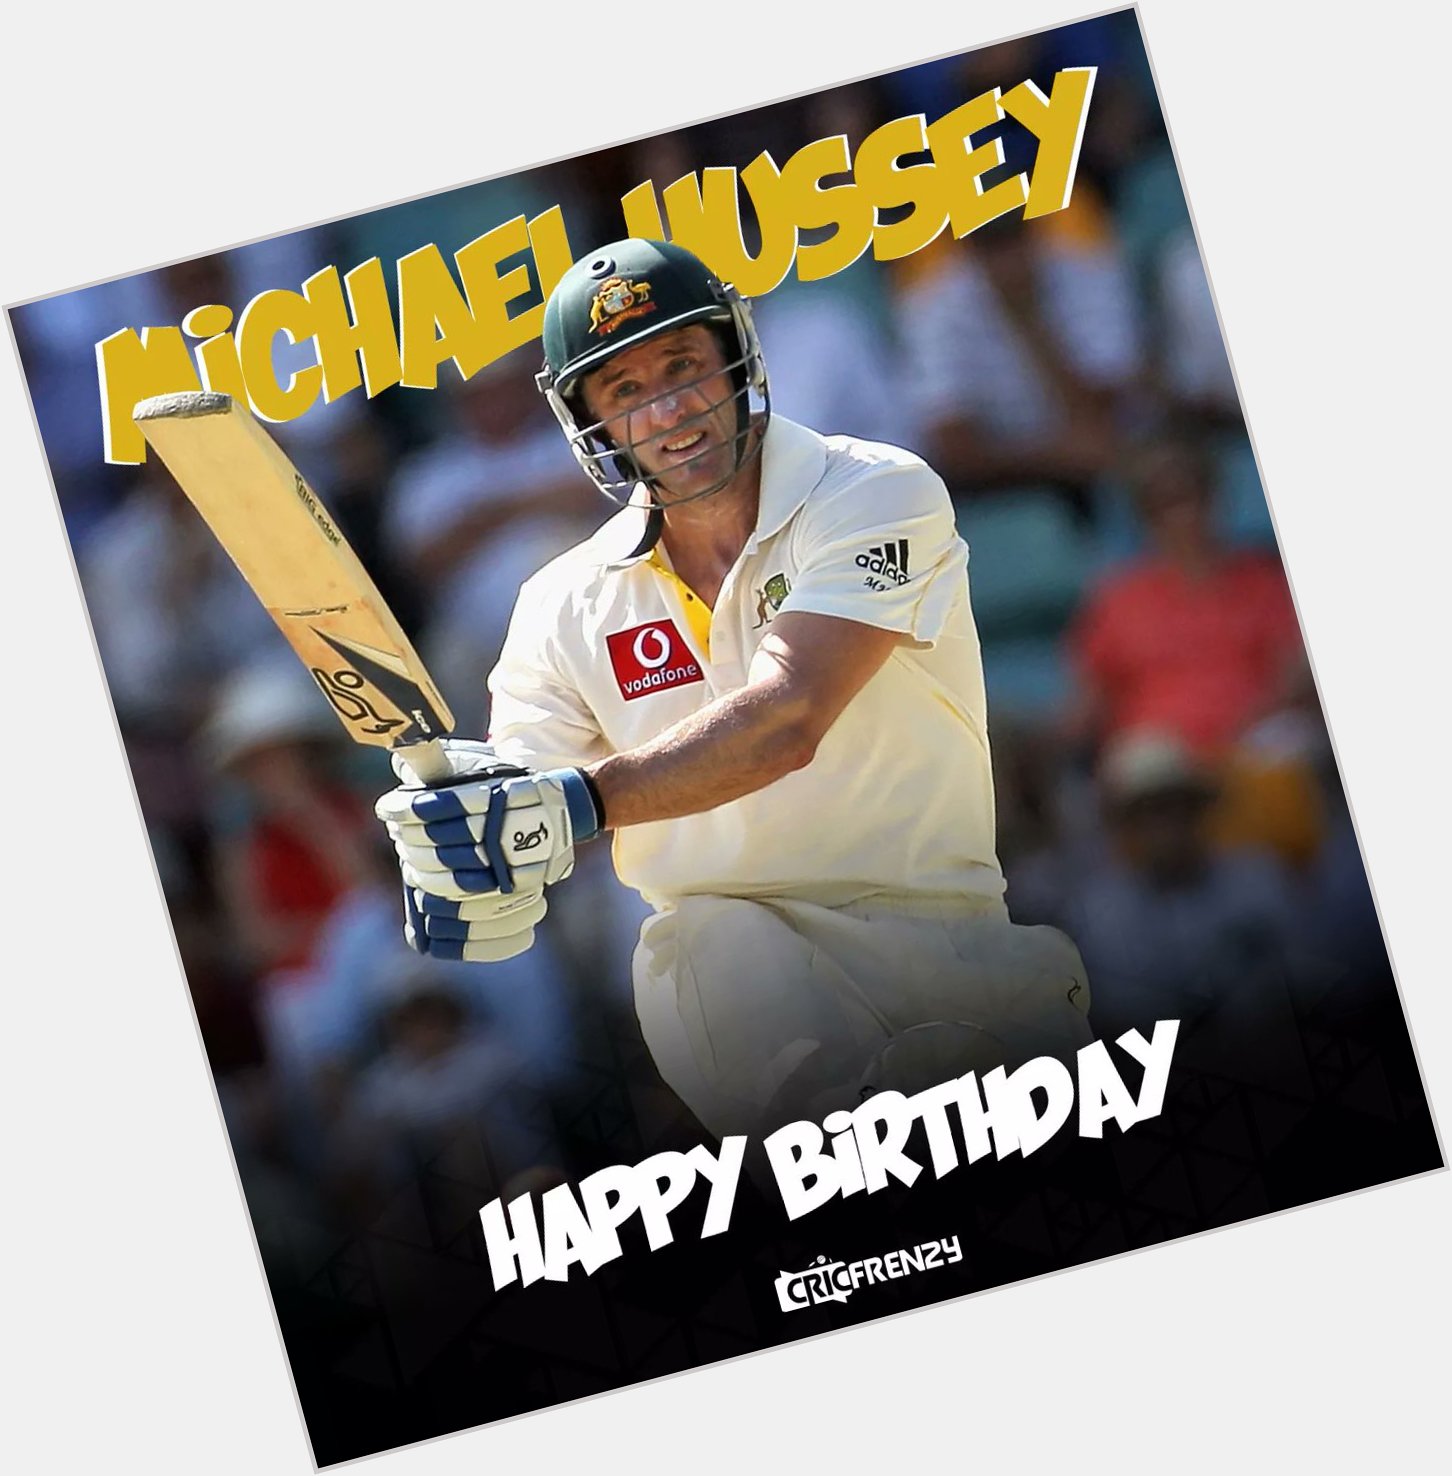 2  0  0  7  ICC Cricket World Cup winner
Happy birthday Michael Hussey    